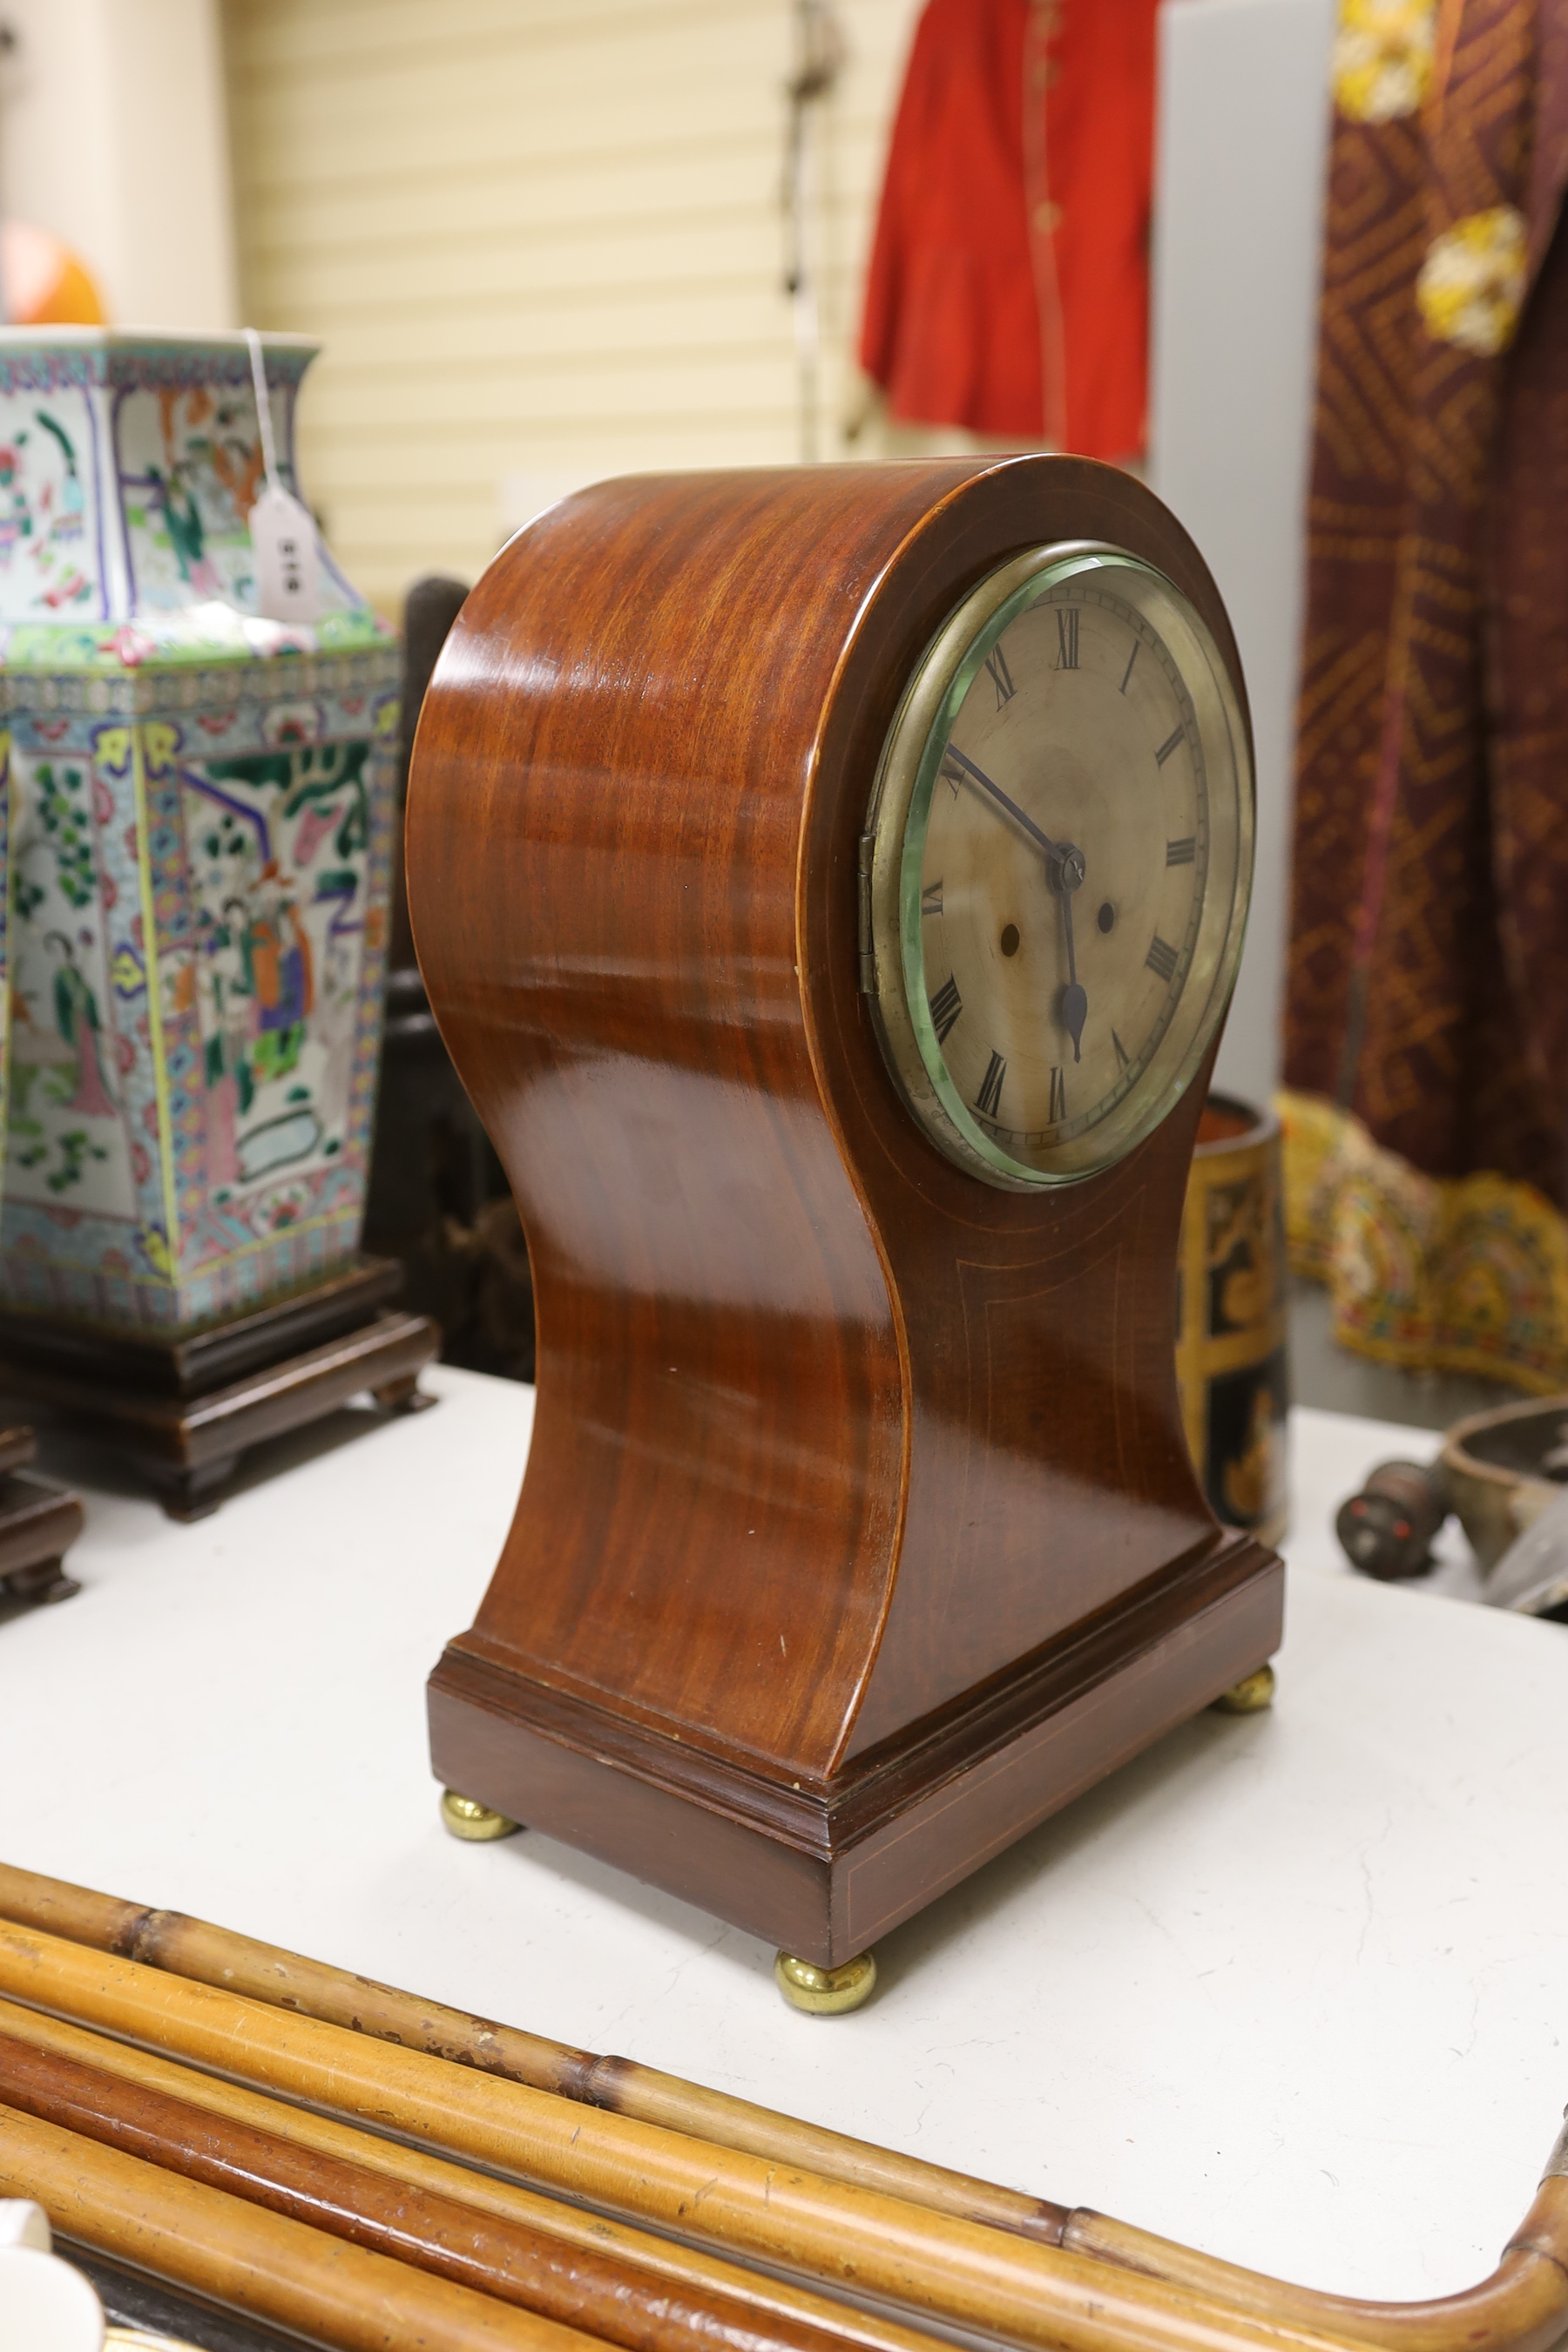 An Edwardian mahogany tear-drop mantel clock (K&P), 42cm